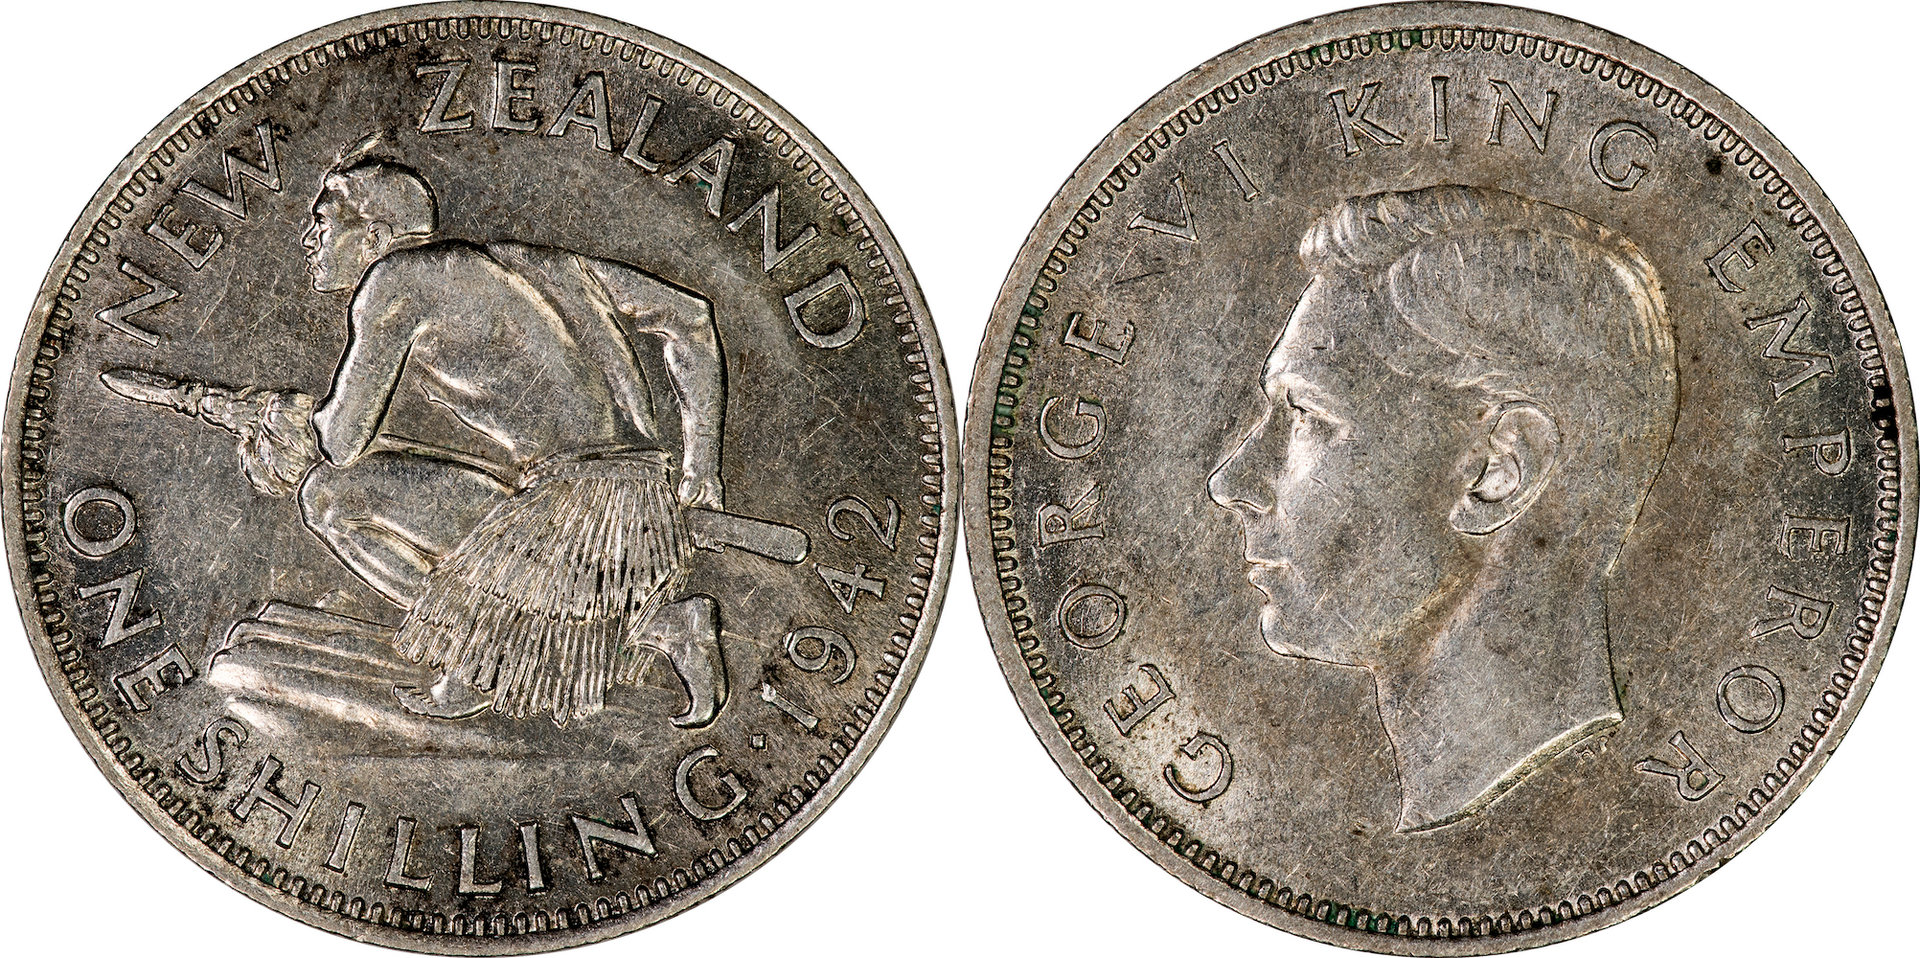 New Zealand - 1942 1 Shilling.jpg